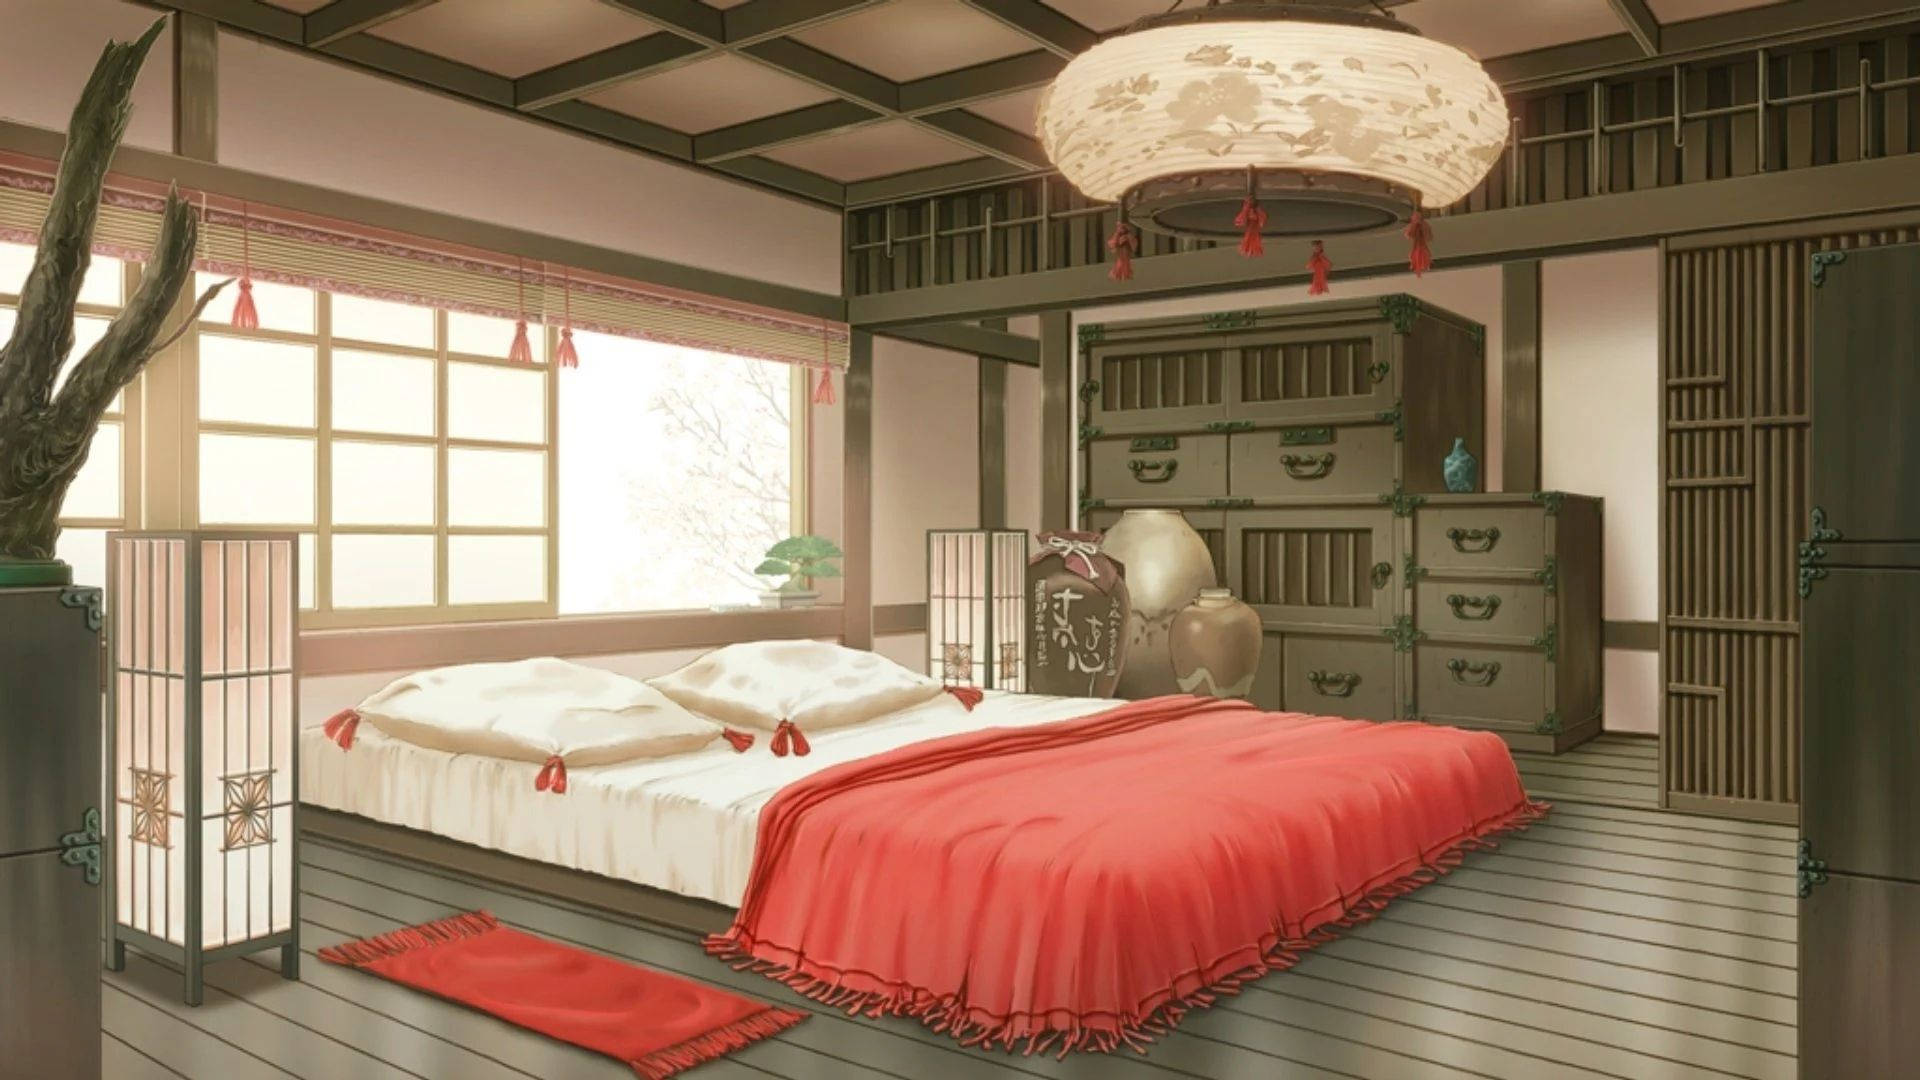 28+] Room Anime Wallpapers - WallpaperSafari